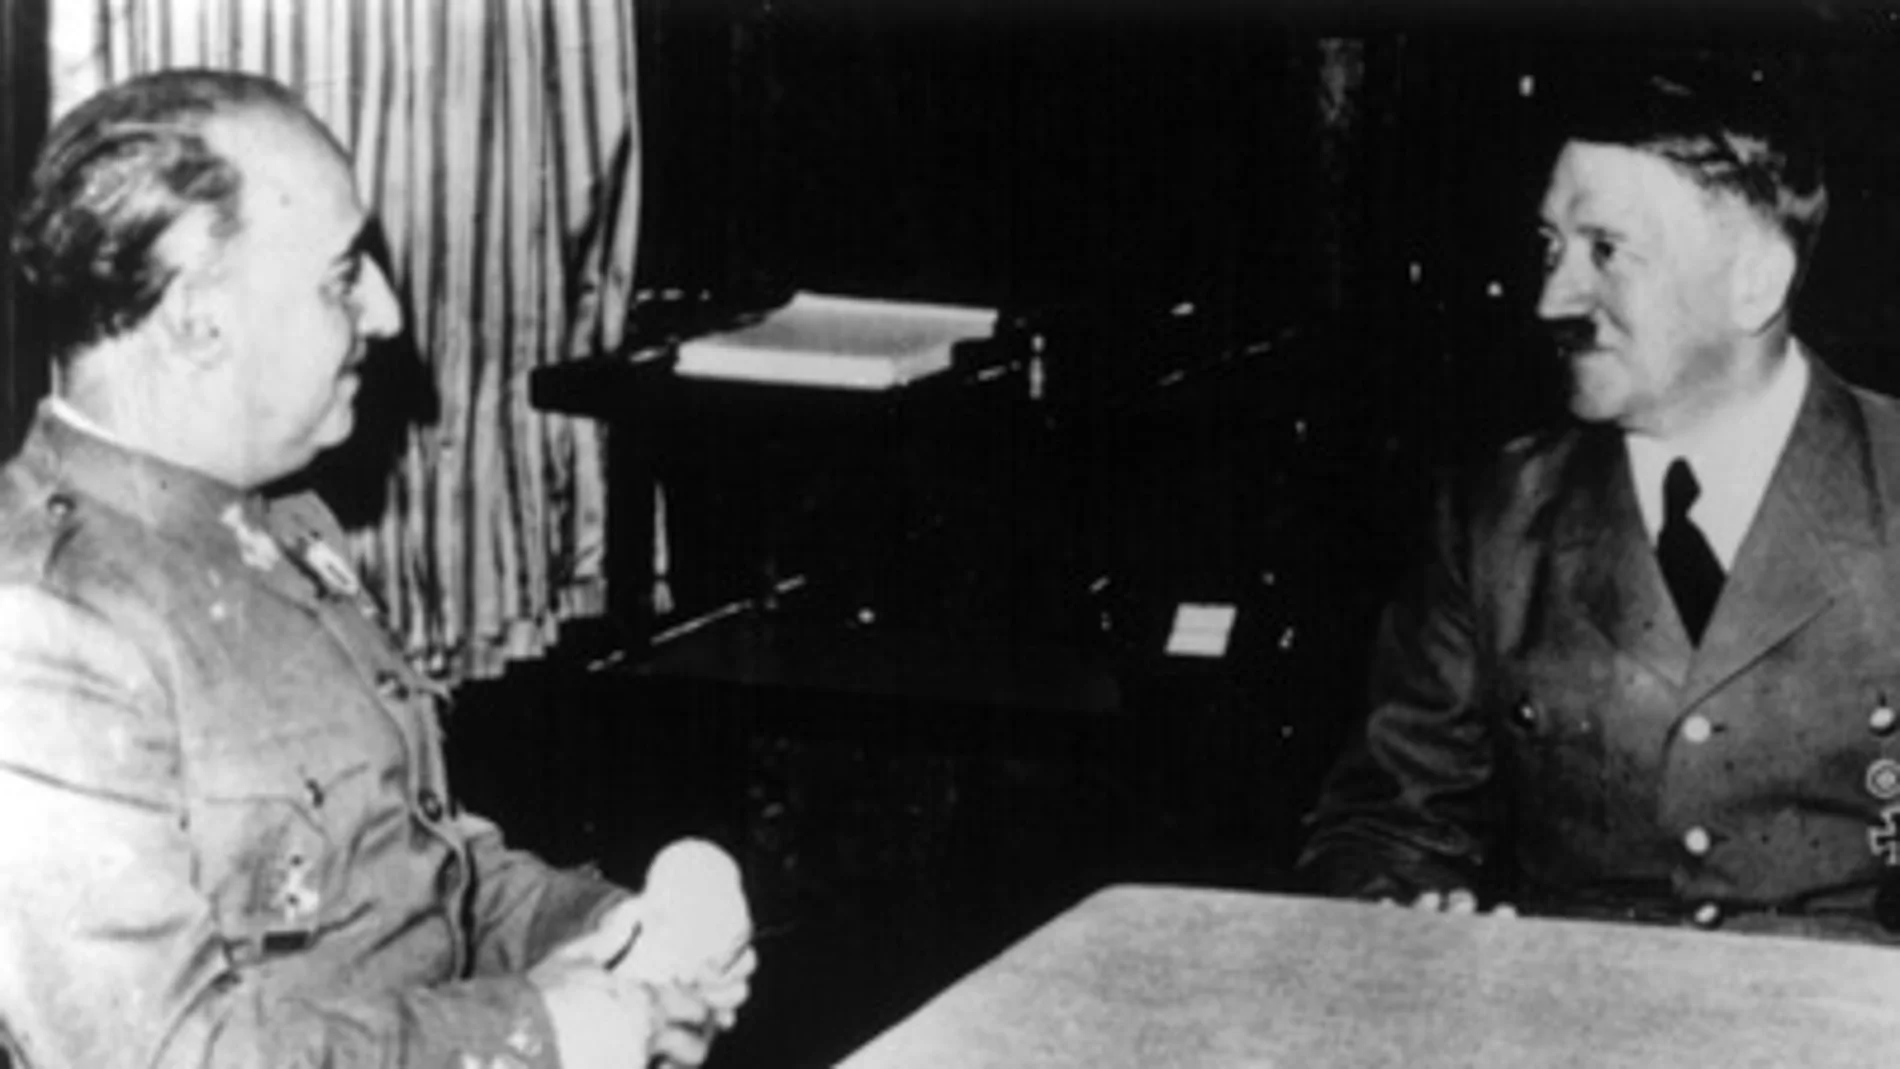 Franco junto a Hitler en la reunión de Hendaya